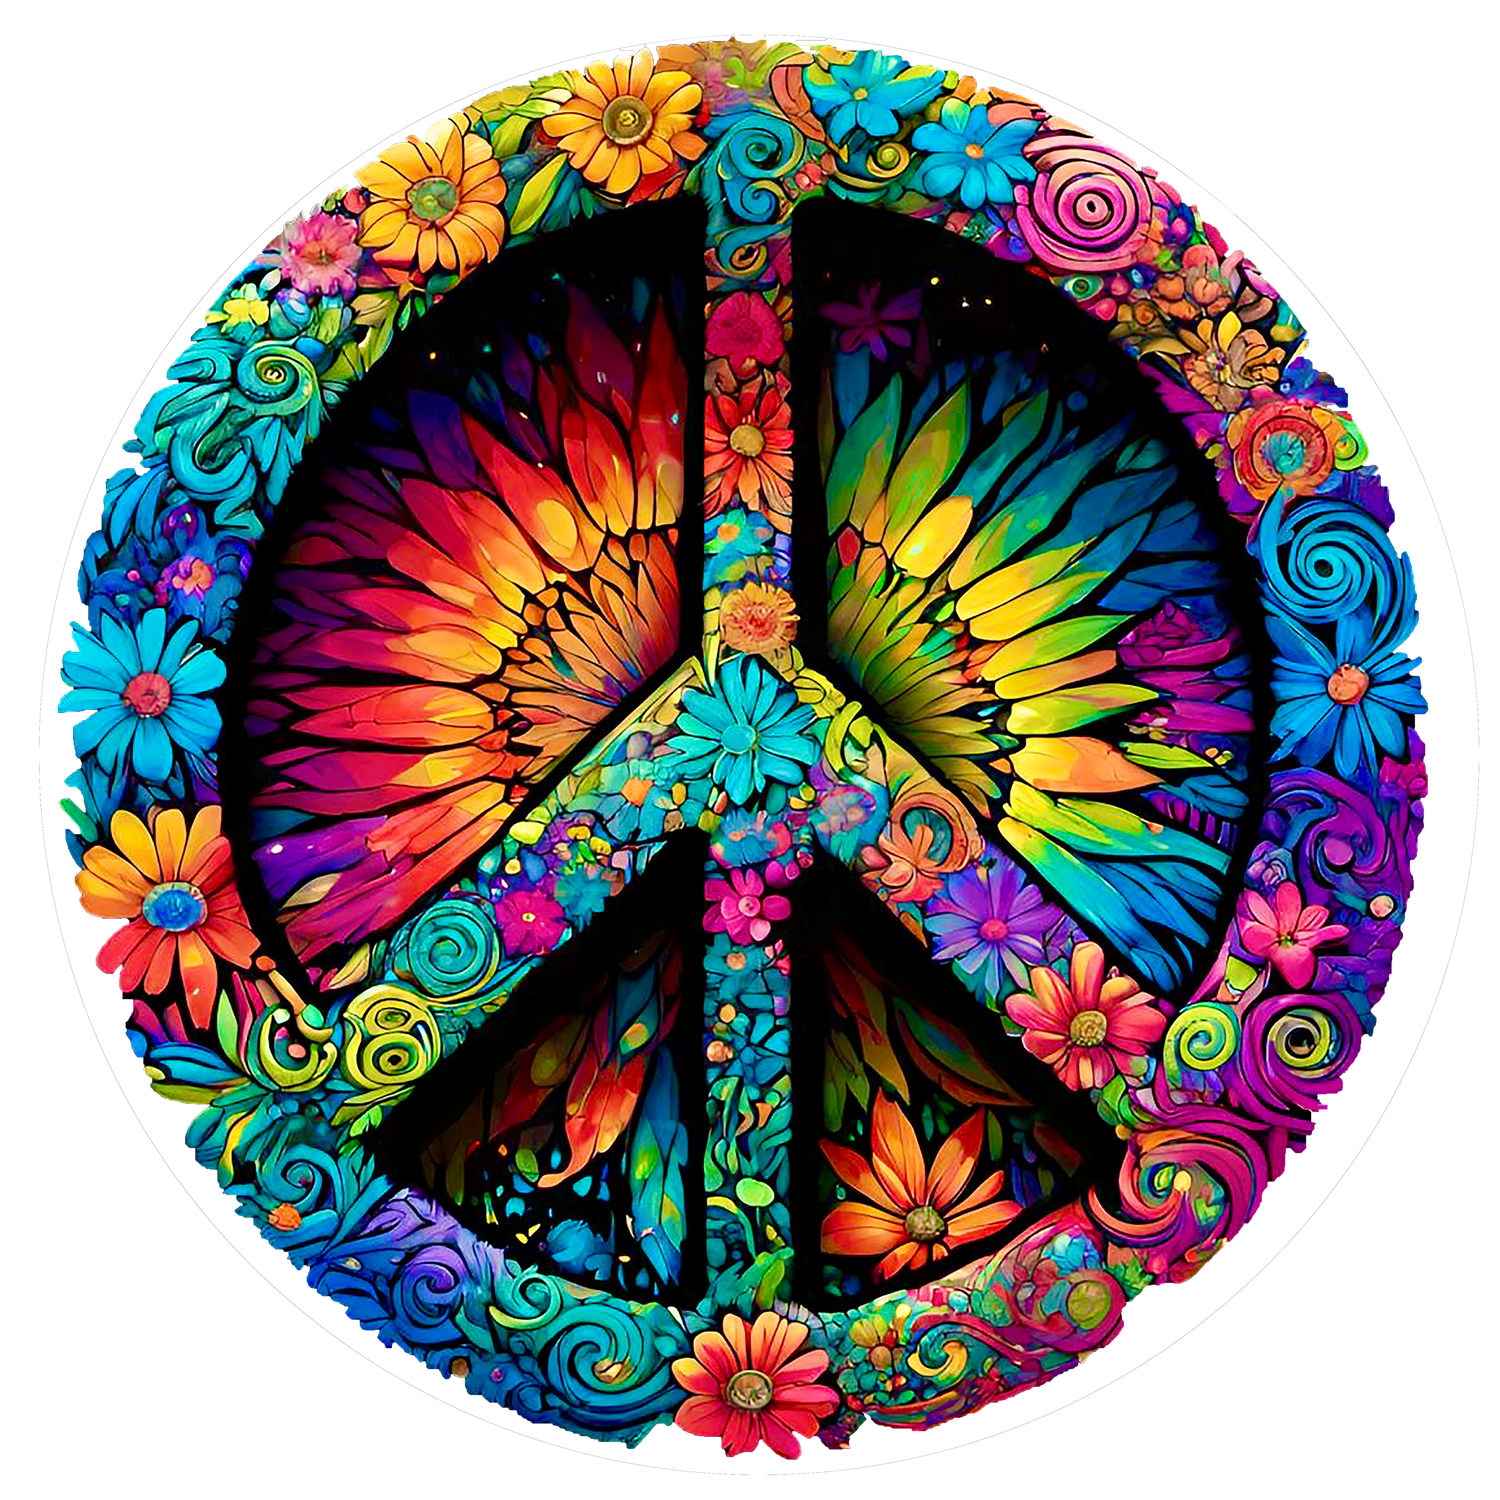 PEACE & LOVE